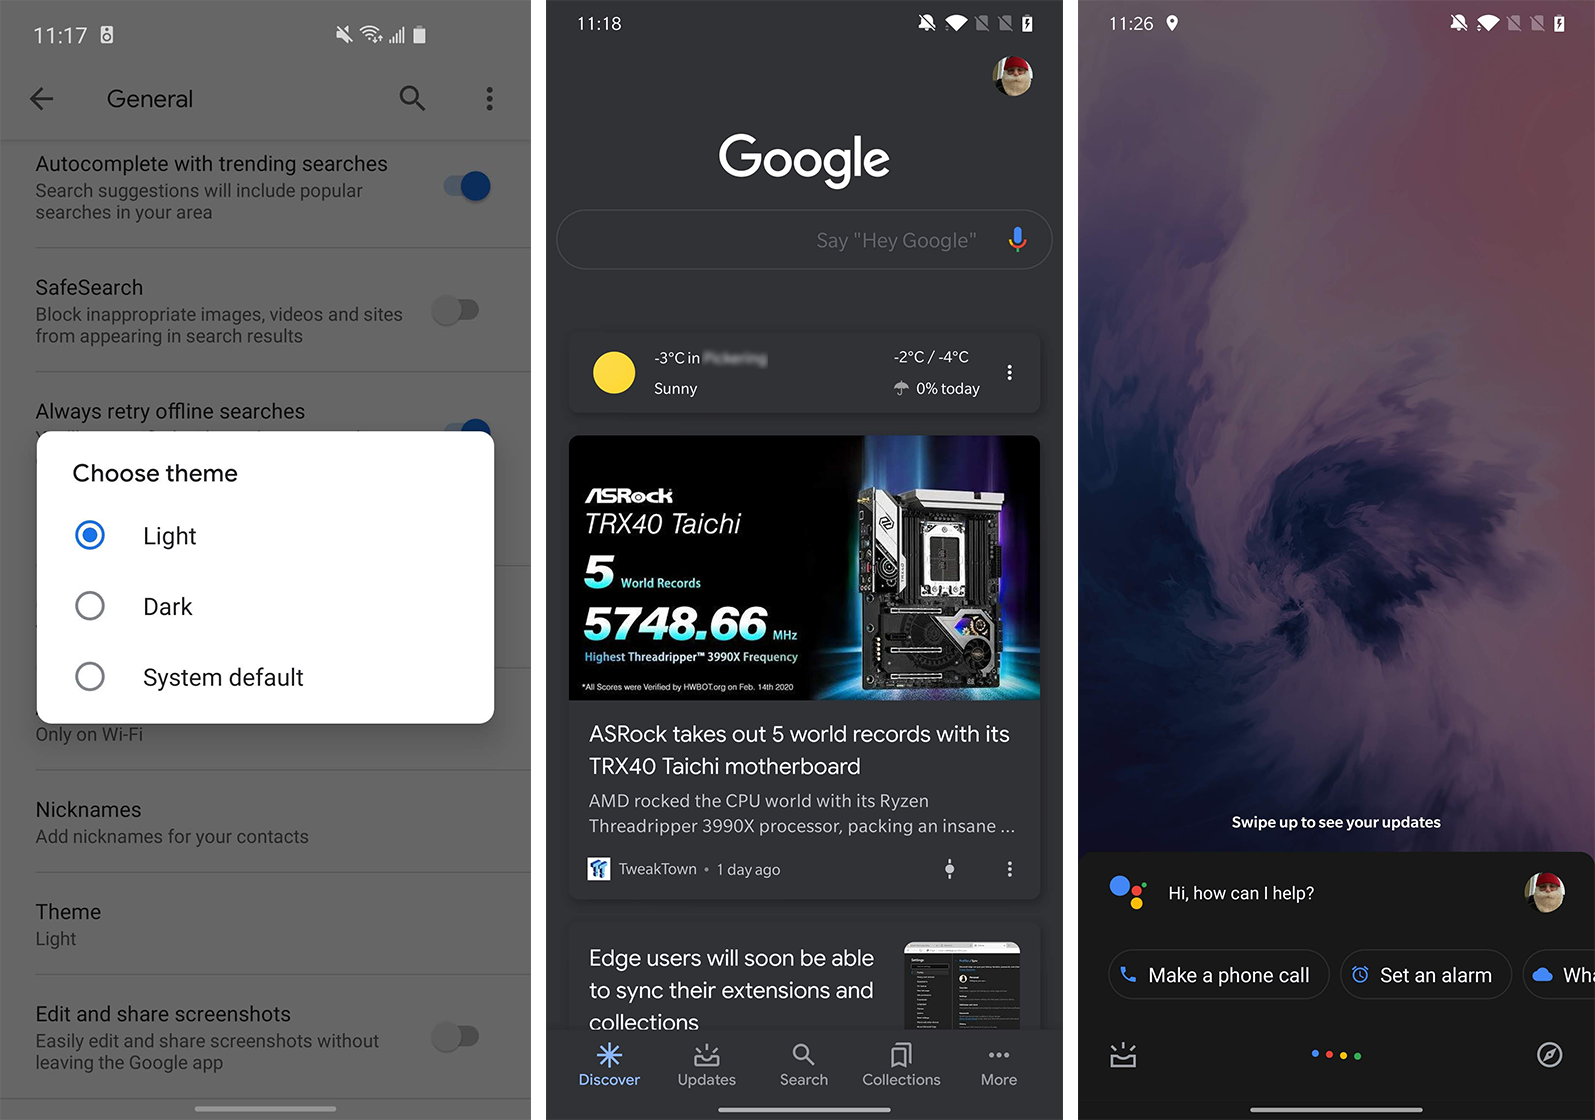 Samsung Galaxy S10e and OnePlus 7 Pro running Google app with dark mode